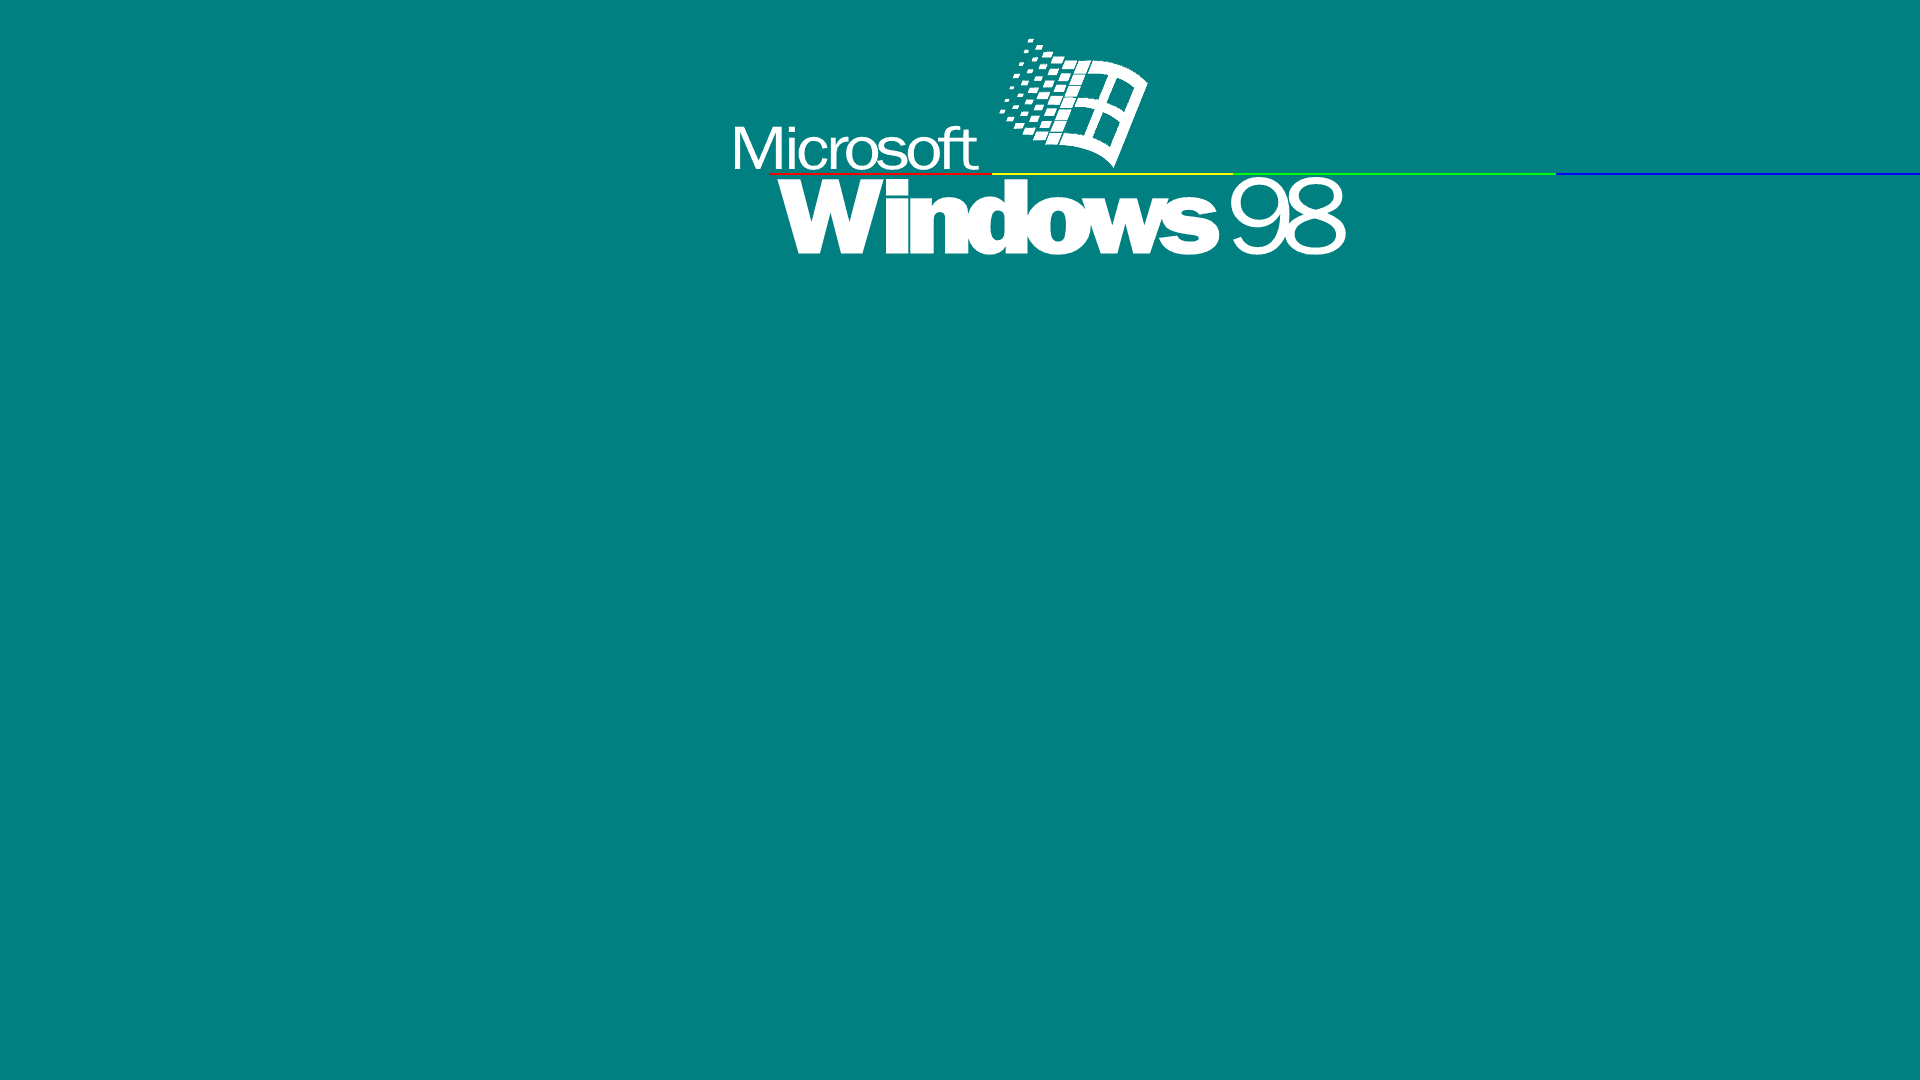 Windows98-logotyp I Teal